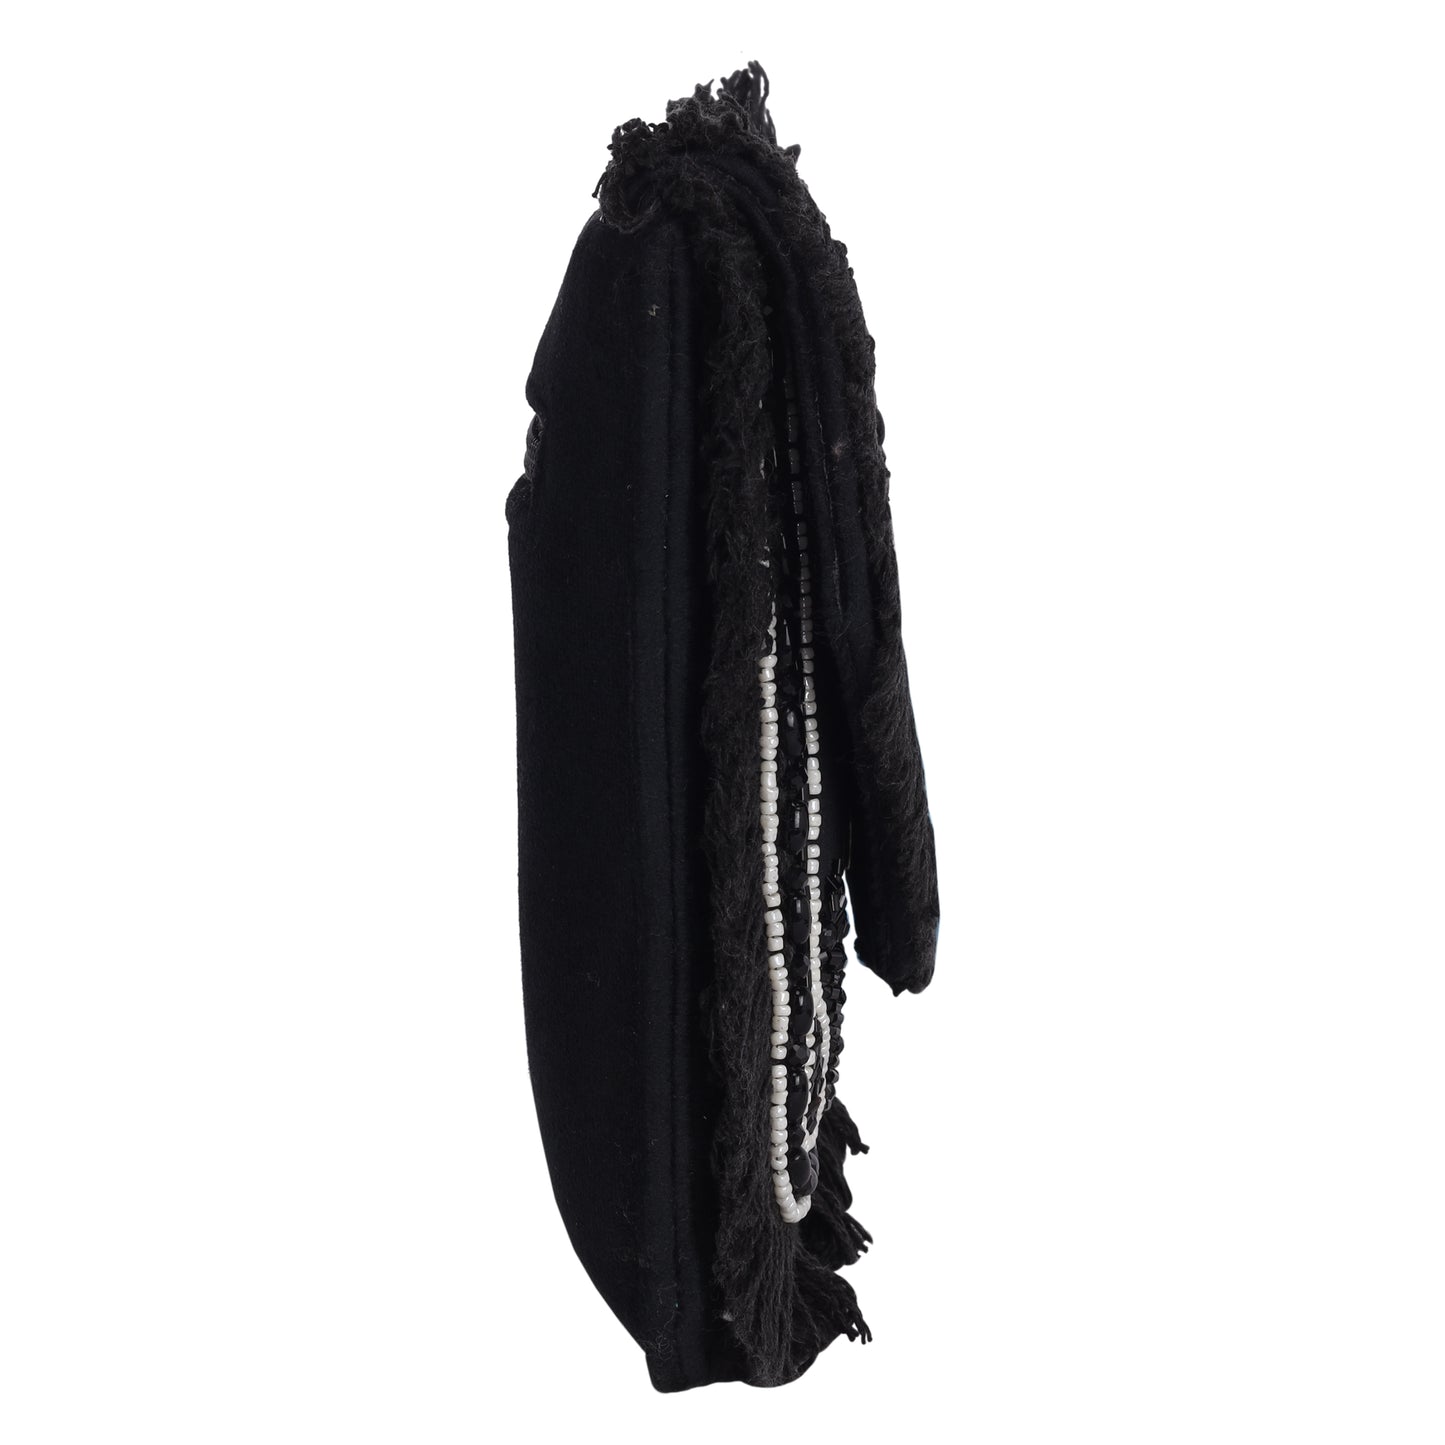 La Reat's Blossom Women's Boho Hand Embroidery Clutch Bag in Black